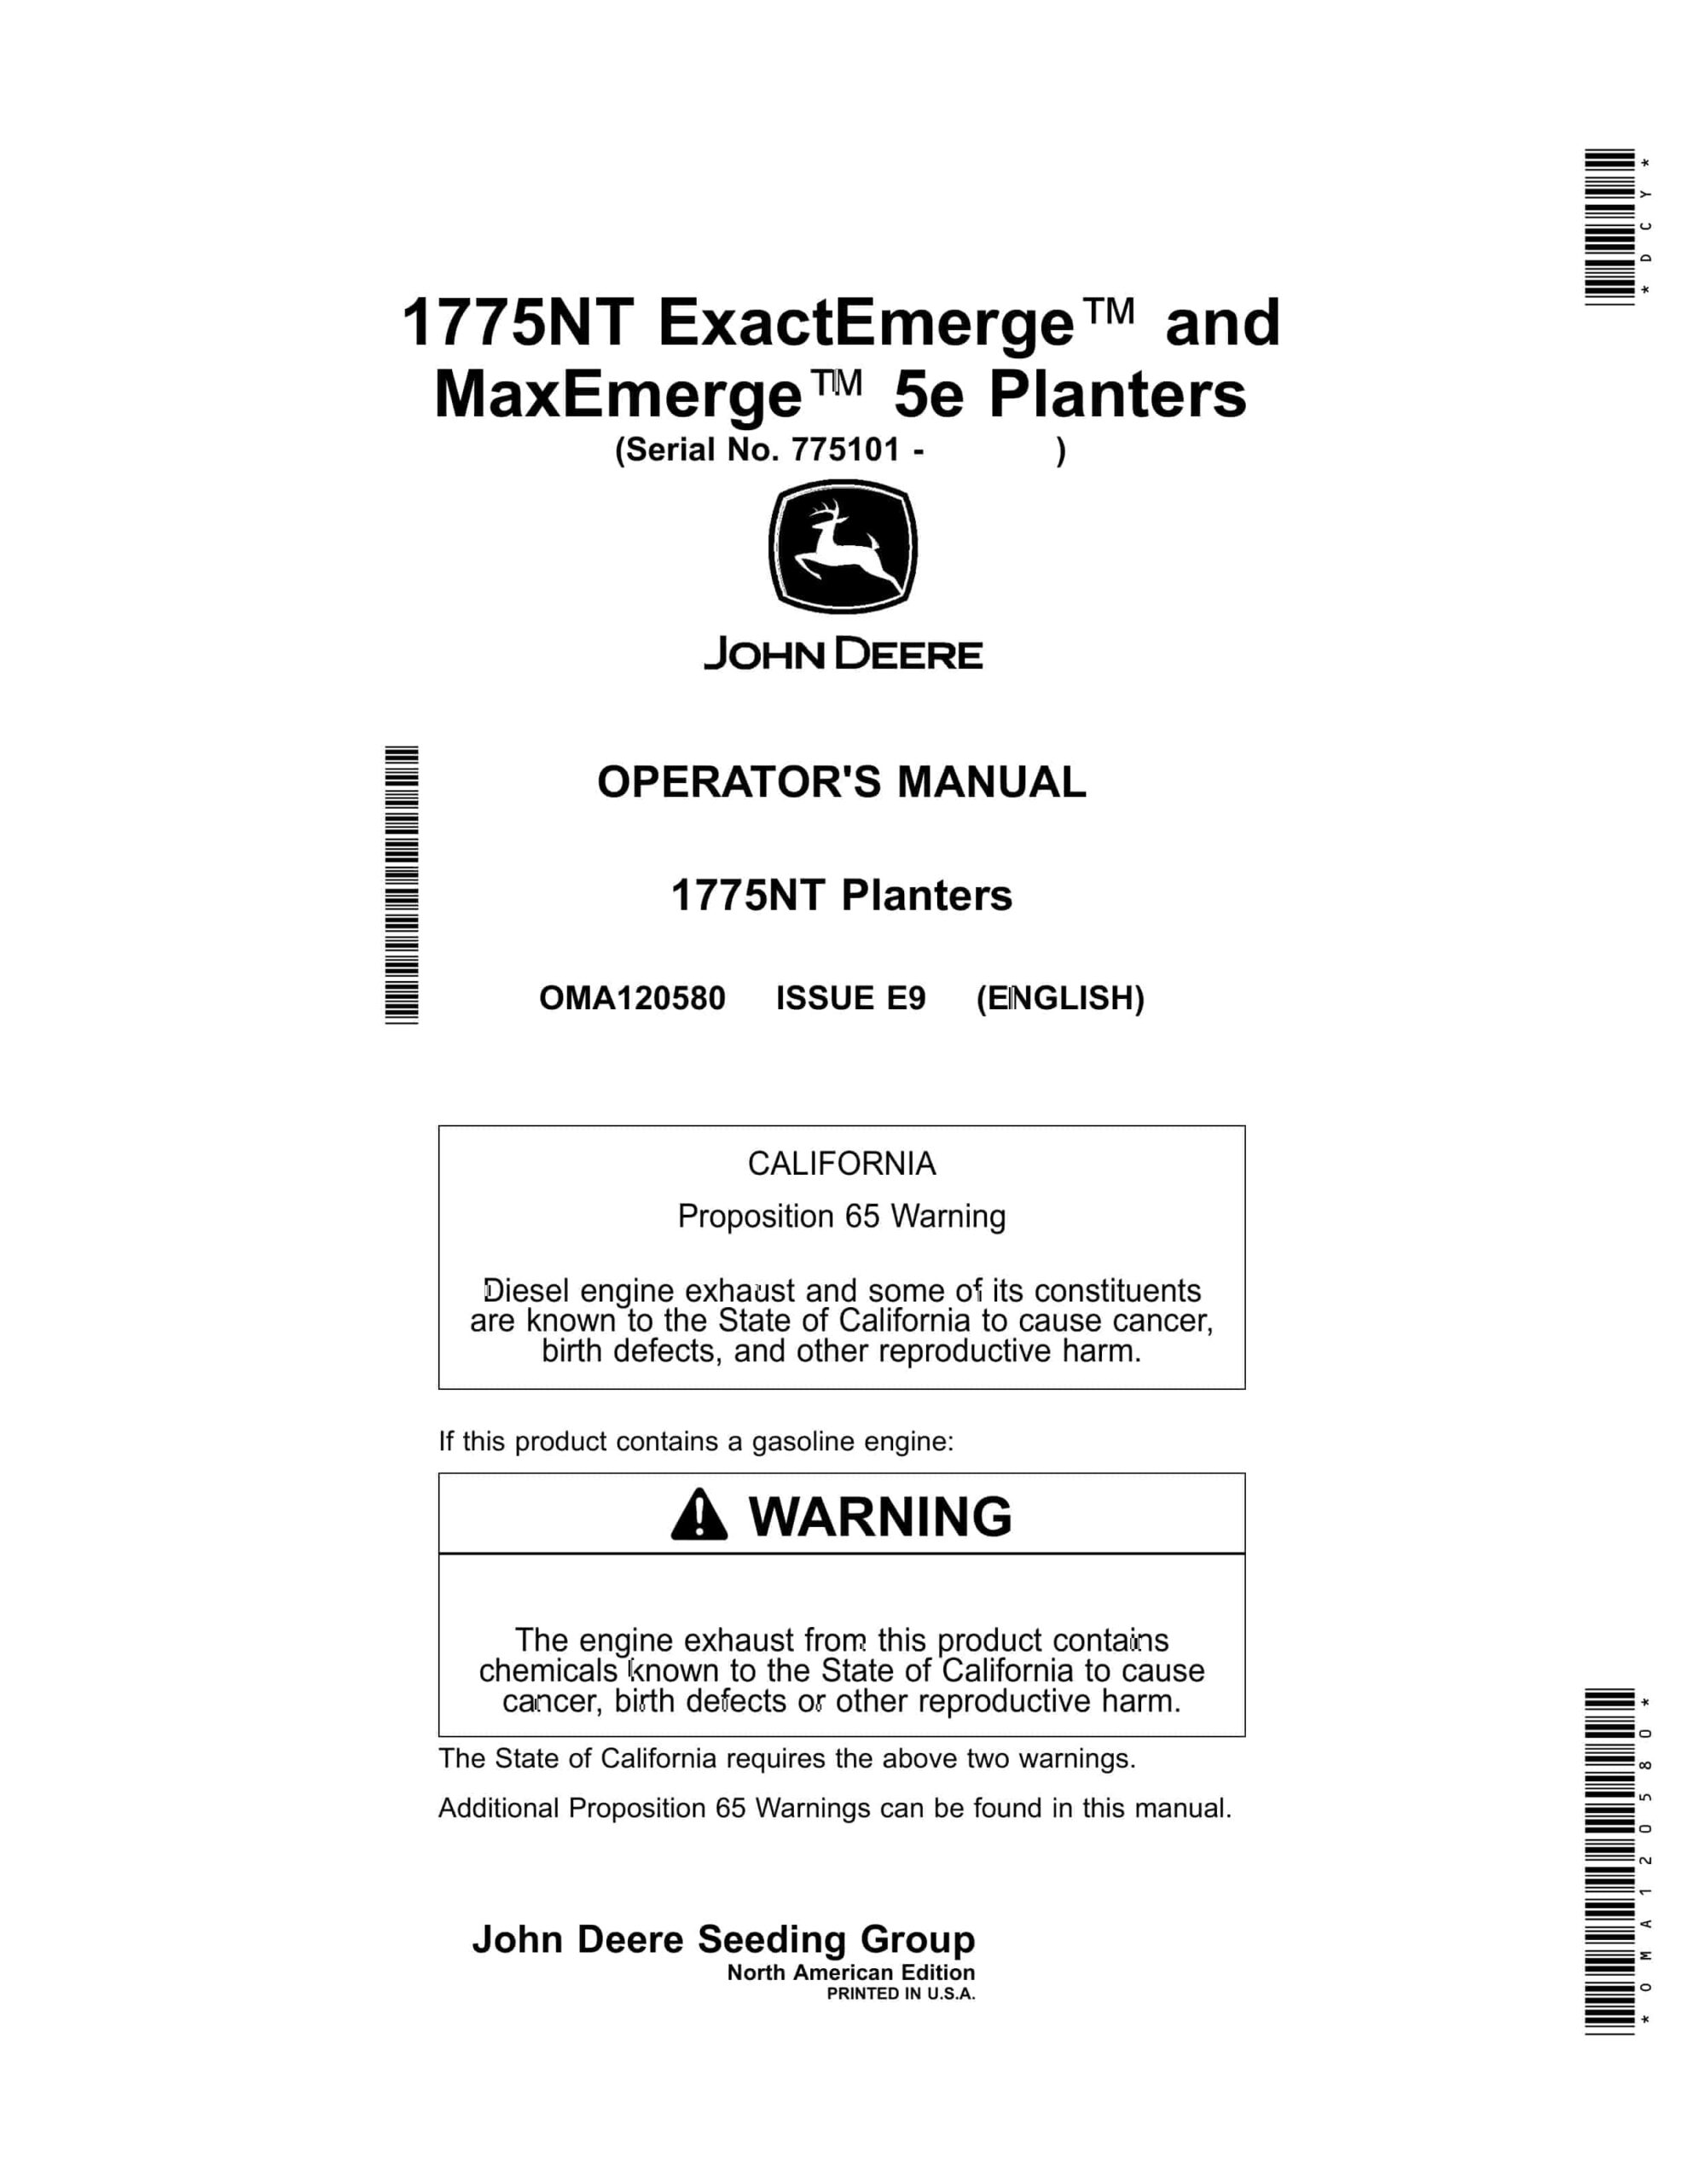 John Deere 1775NT ExactEmerge and MaxEmerge 5e Planter Operator Manual OMA120580-1